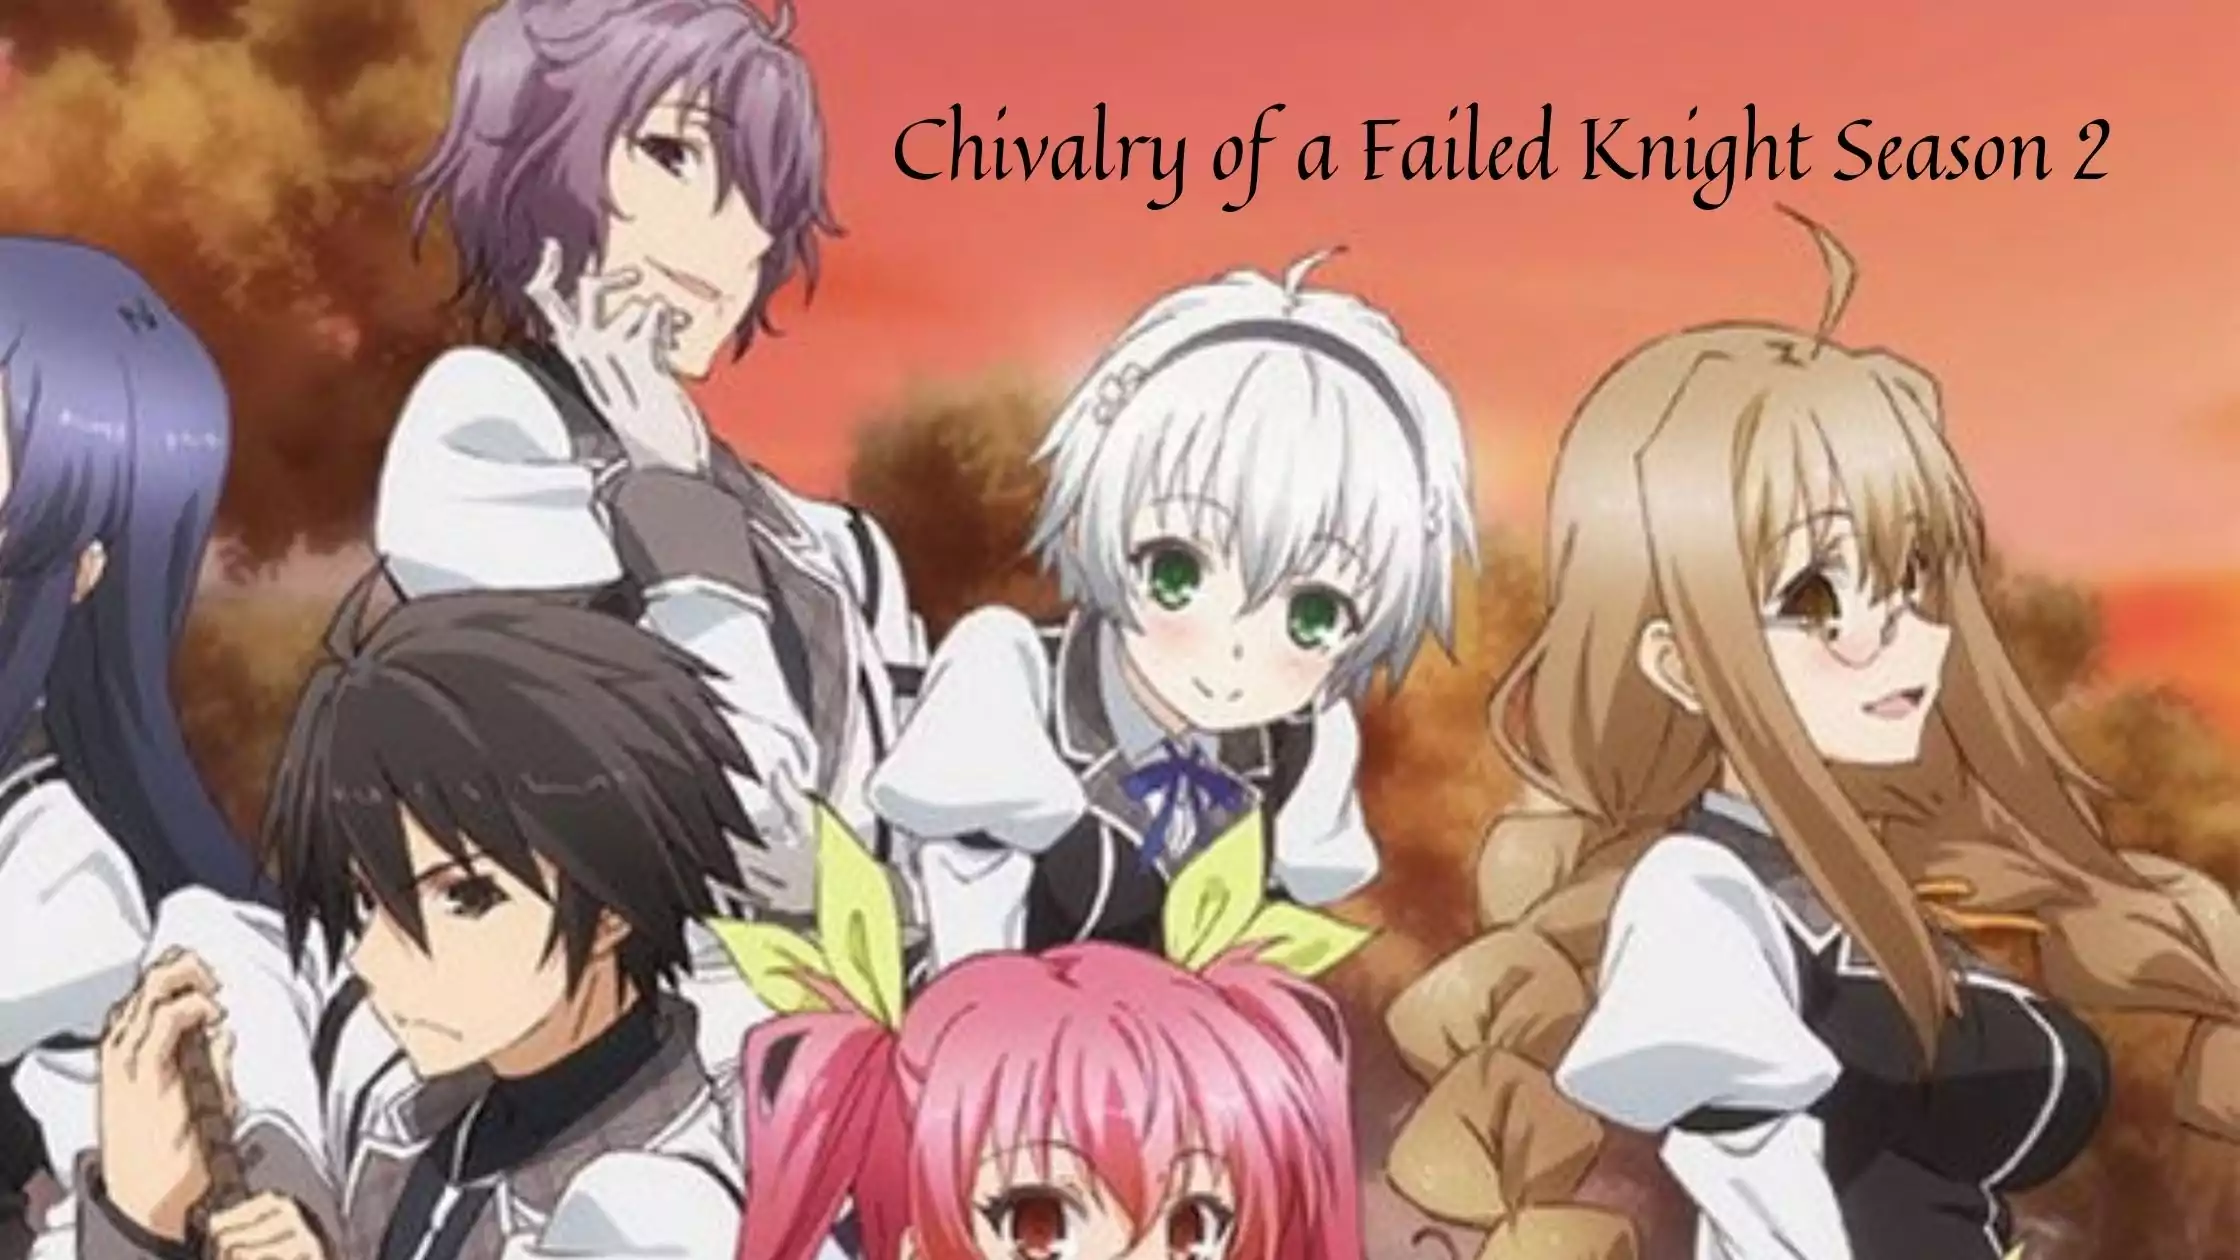 Chivalry of a failed knight